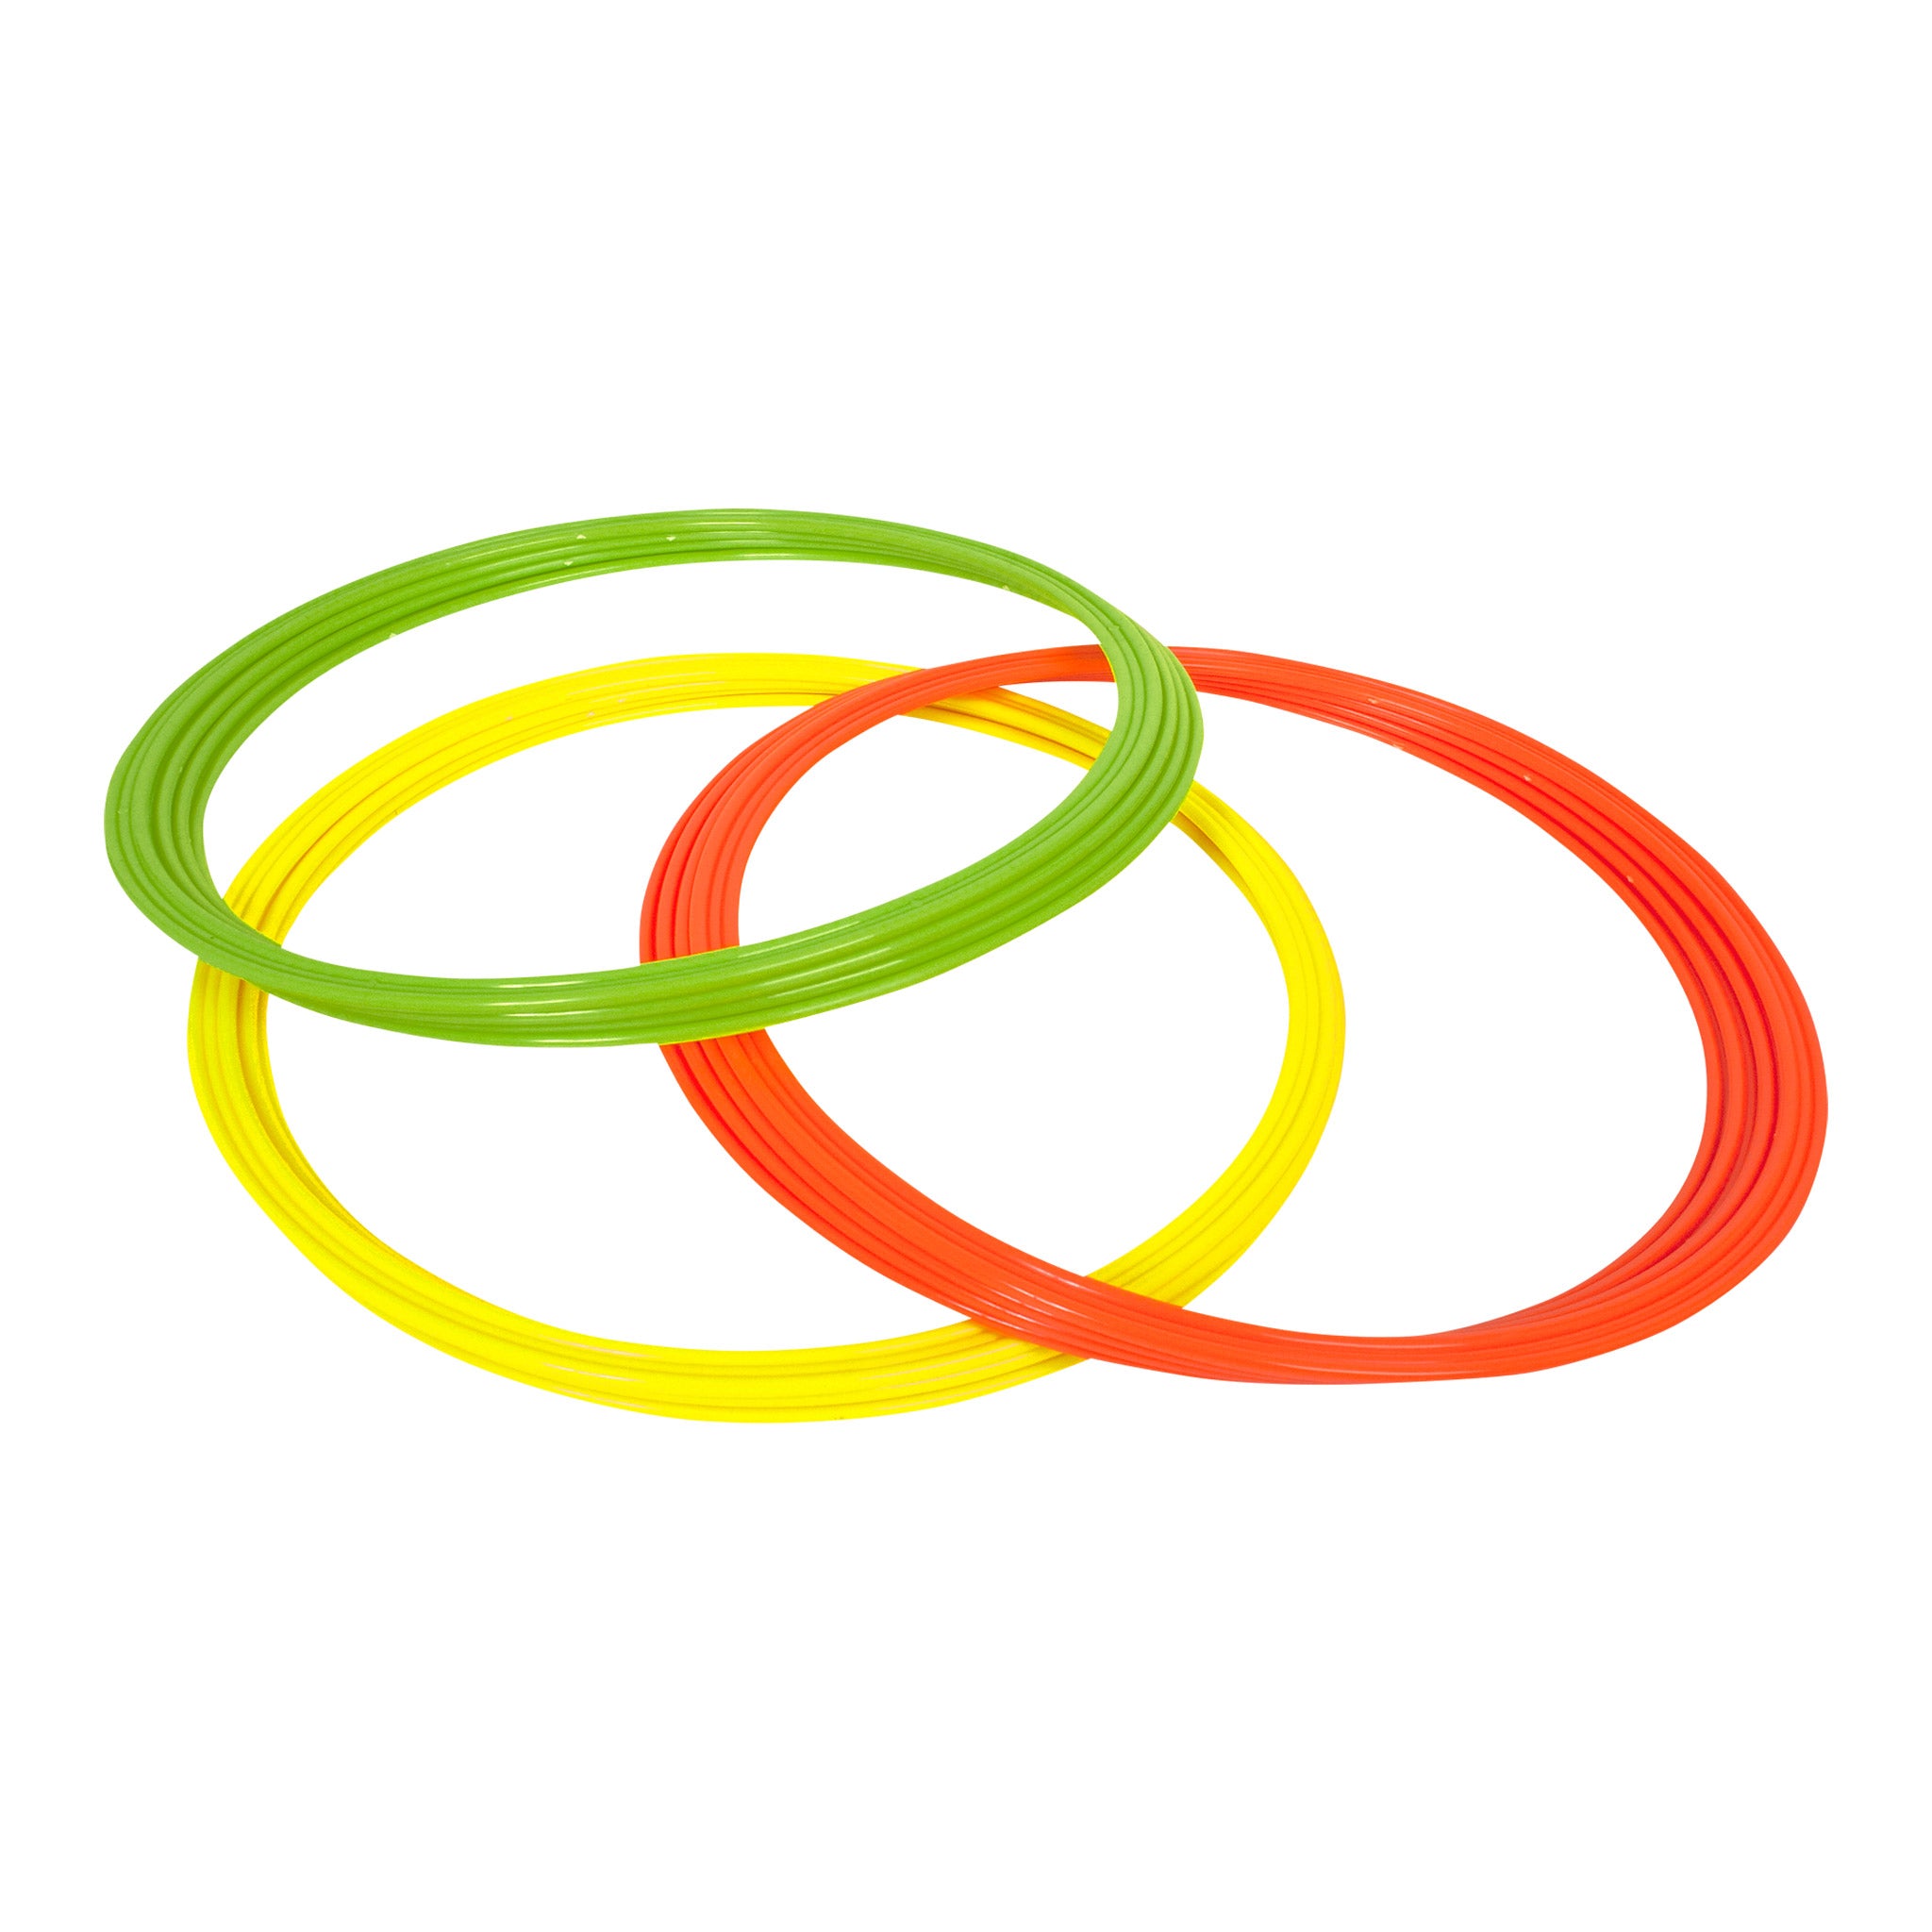 Multi color coordination rings #color_yellow/orange/green